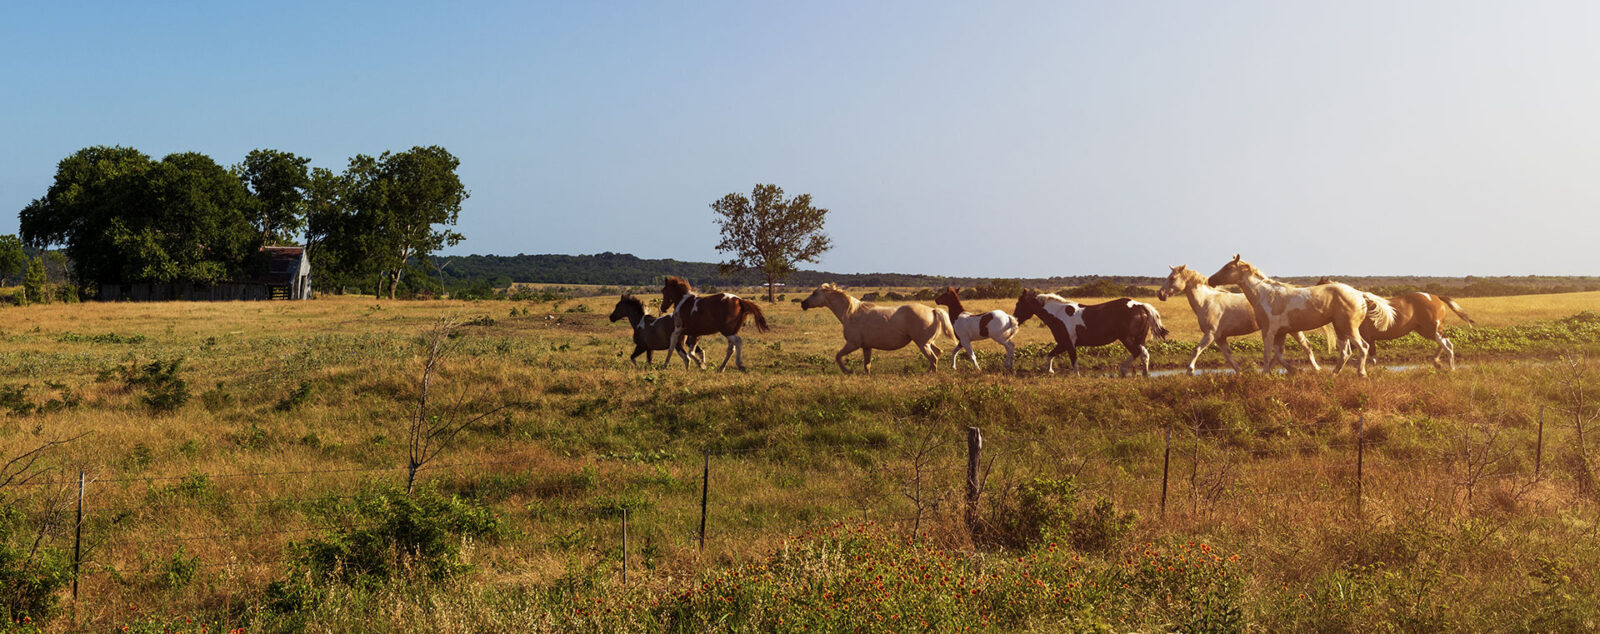 wild horses running in a field